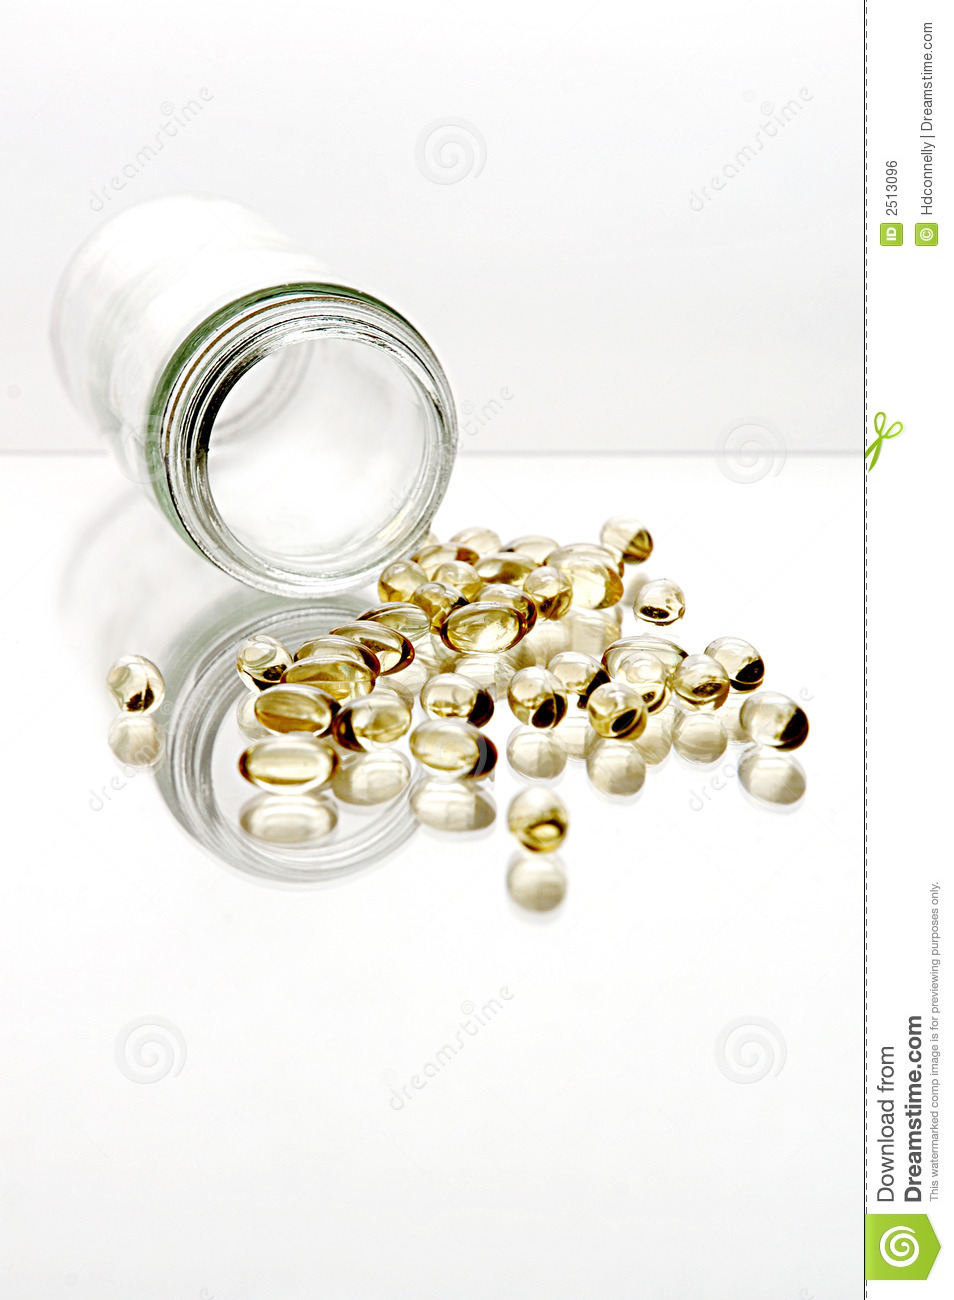 Vitamin E Royalty Free Stock Image   Image  2513096